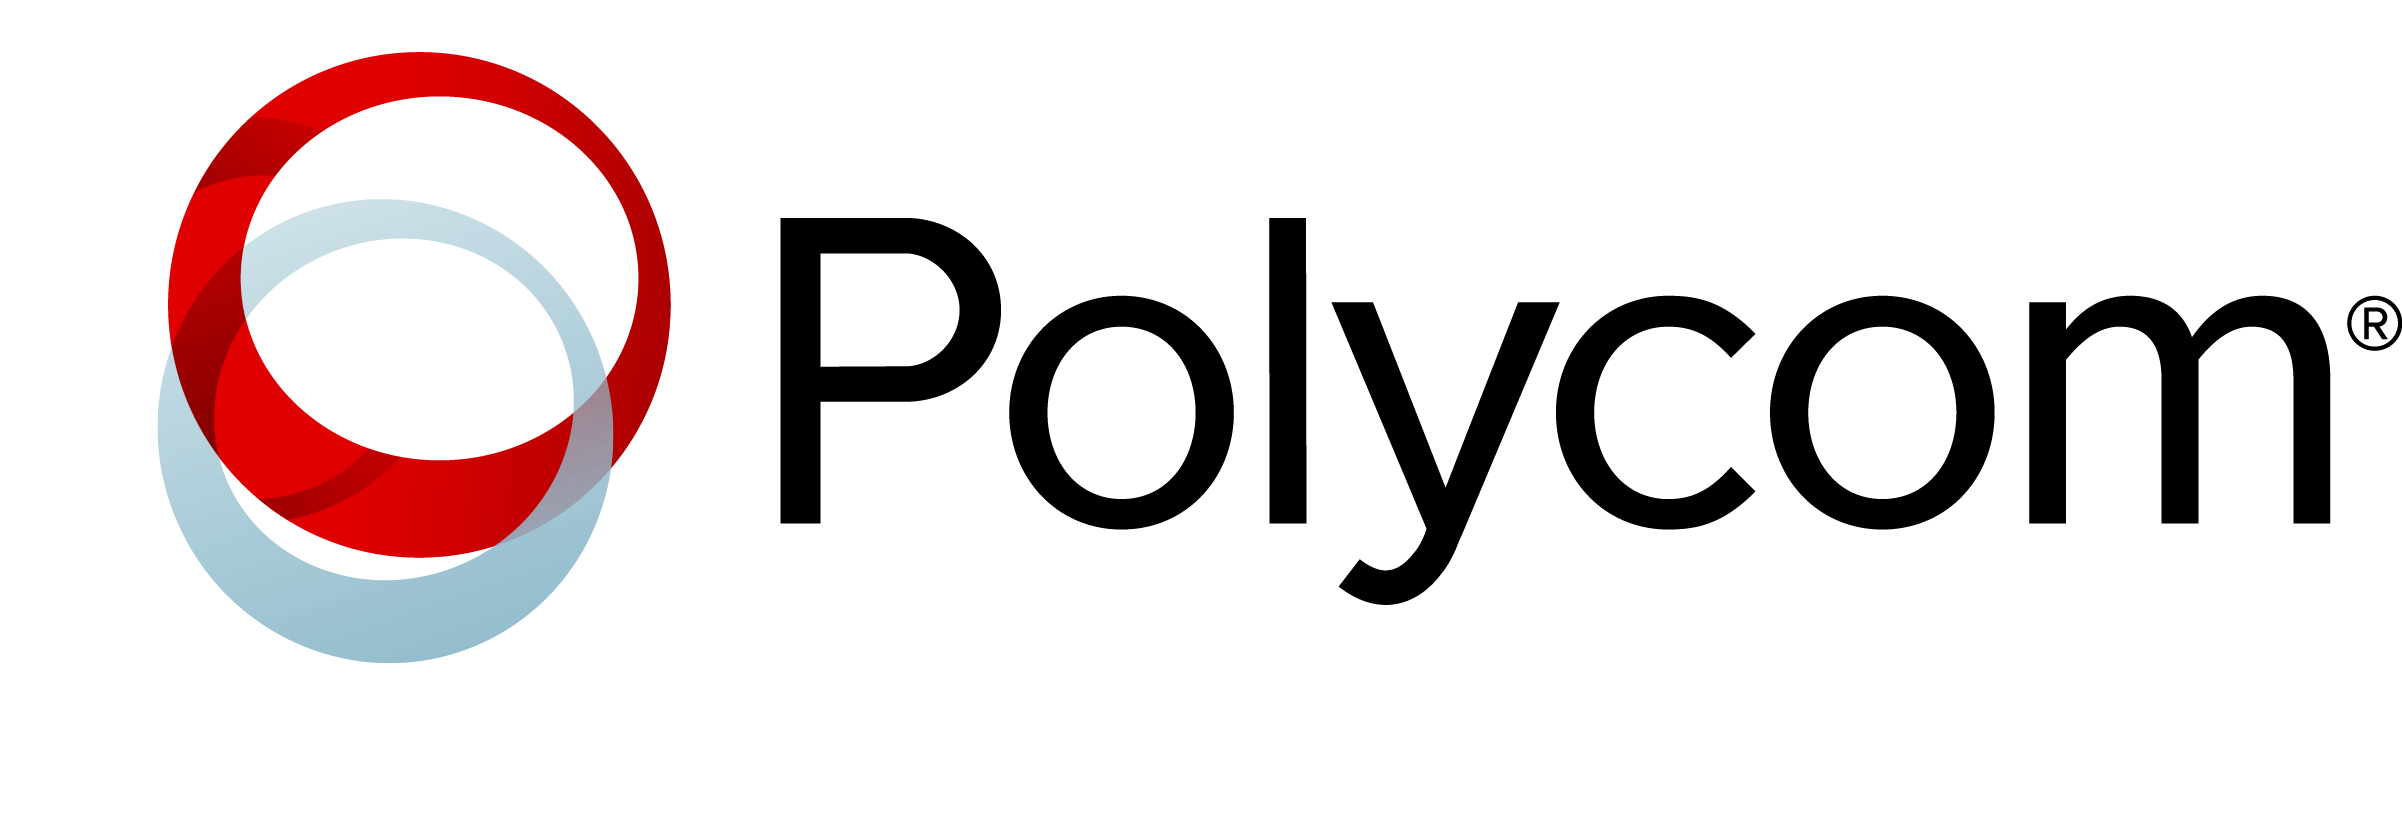 Polycom - Zoom connector